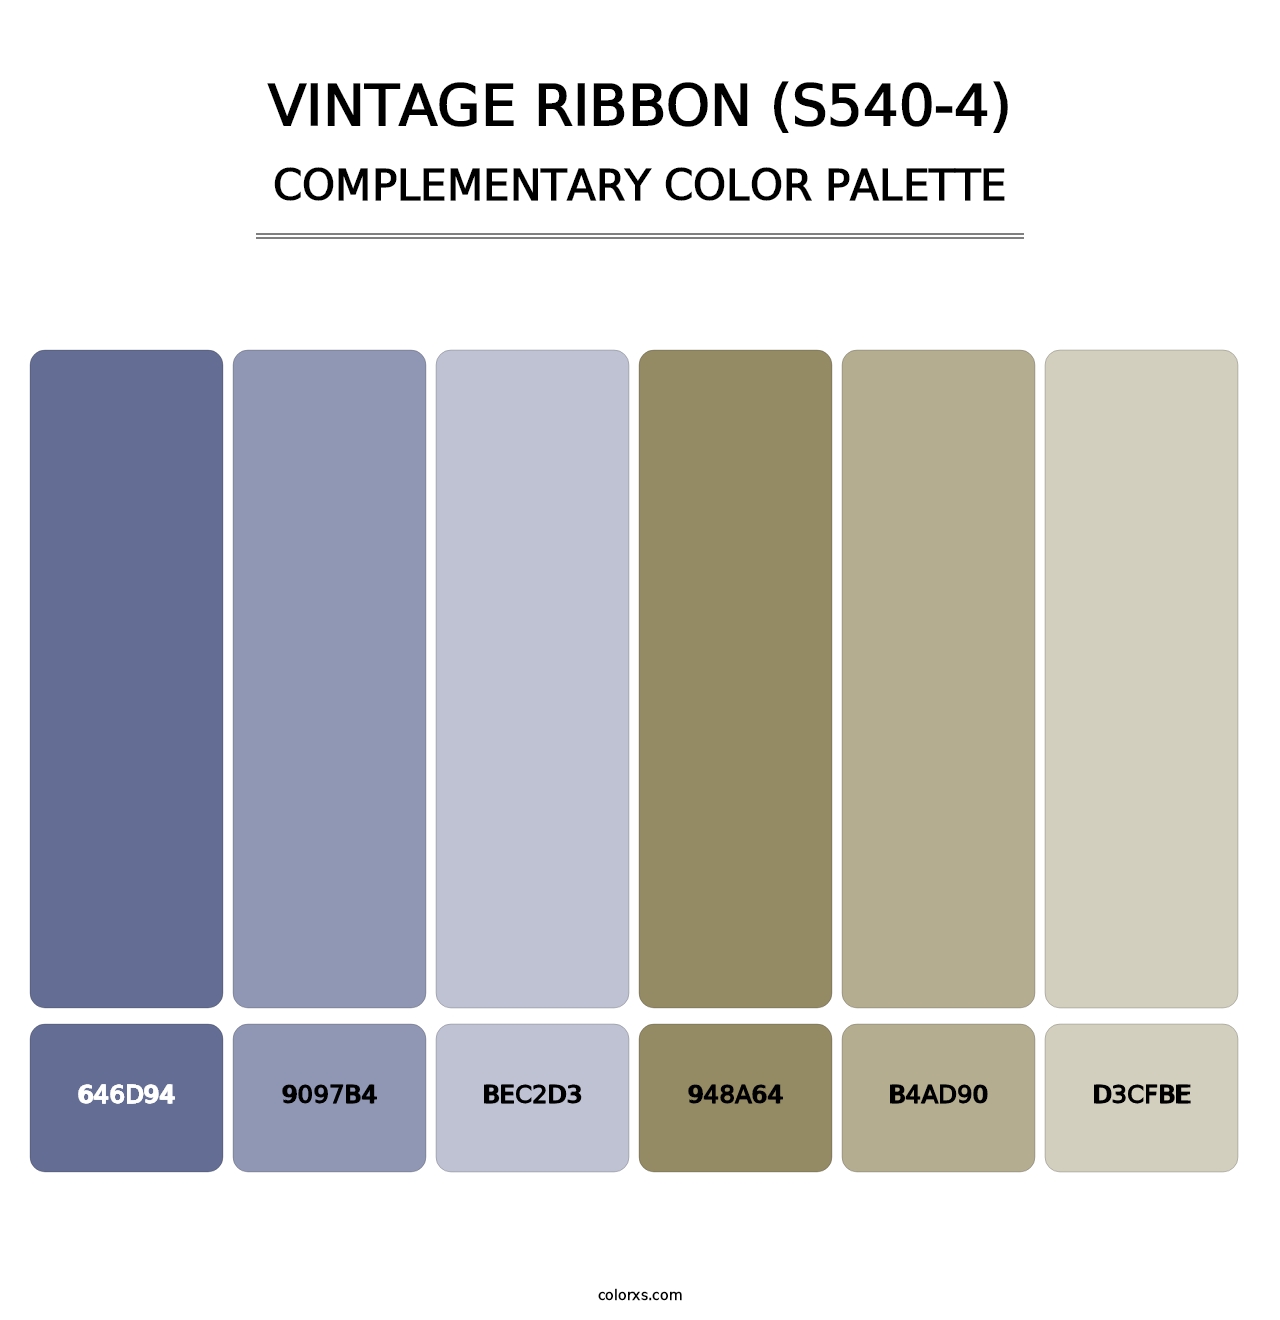 Vintage Ribbon (S540-4) - Complementary Color Palette